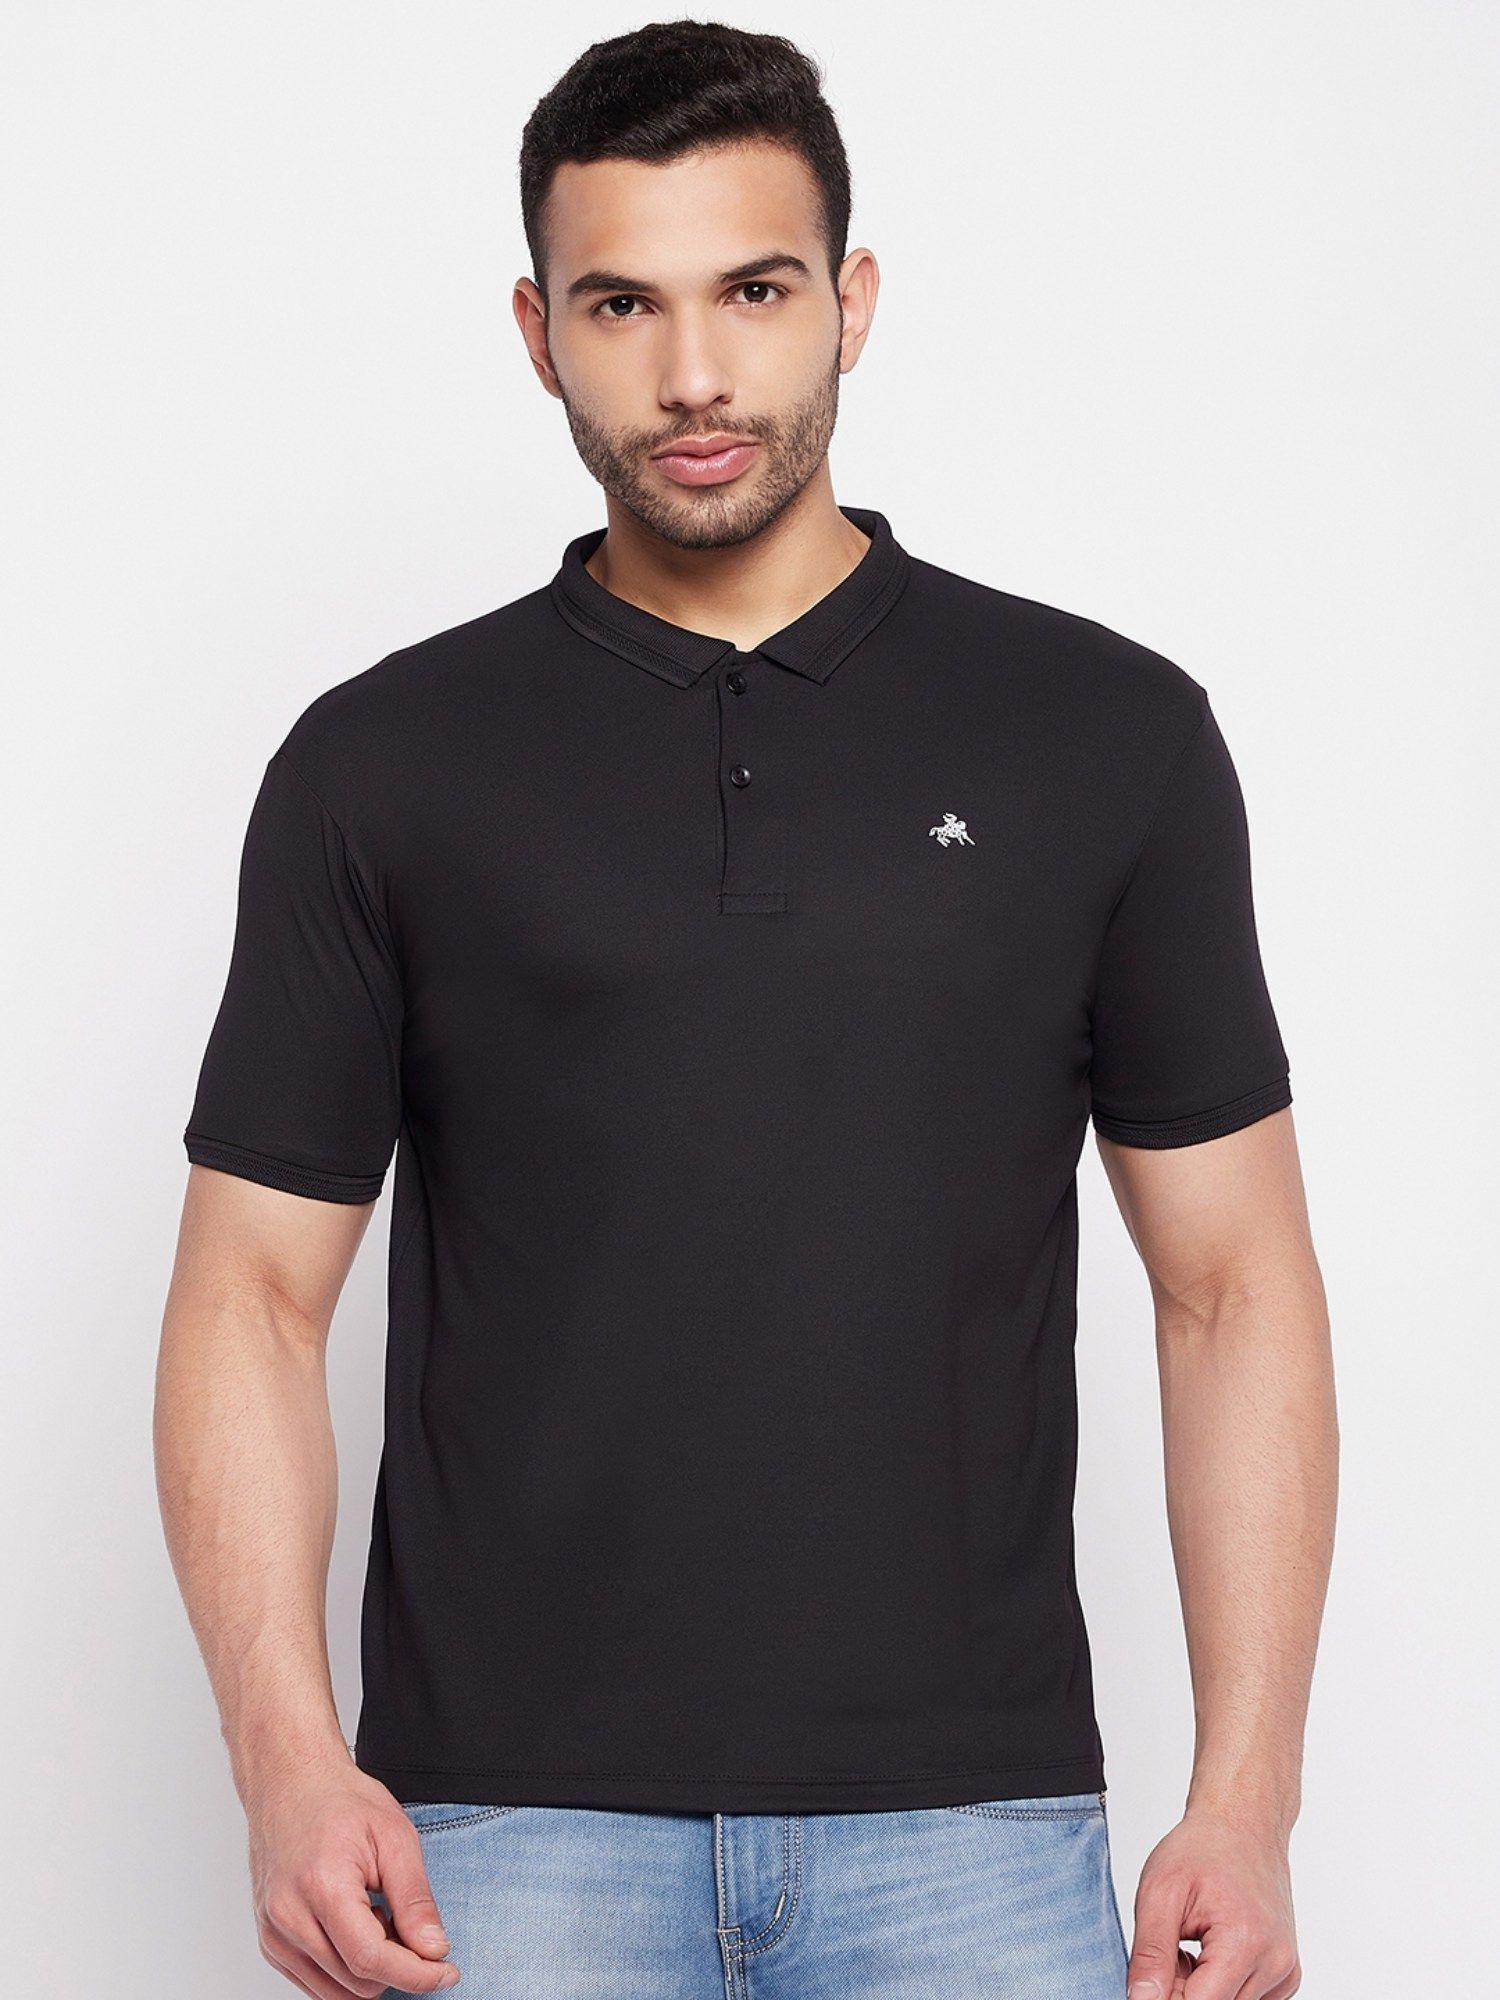 men's black printed polo neck t-shirt